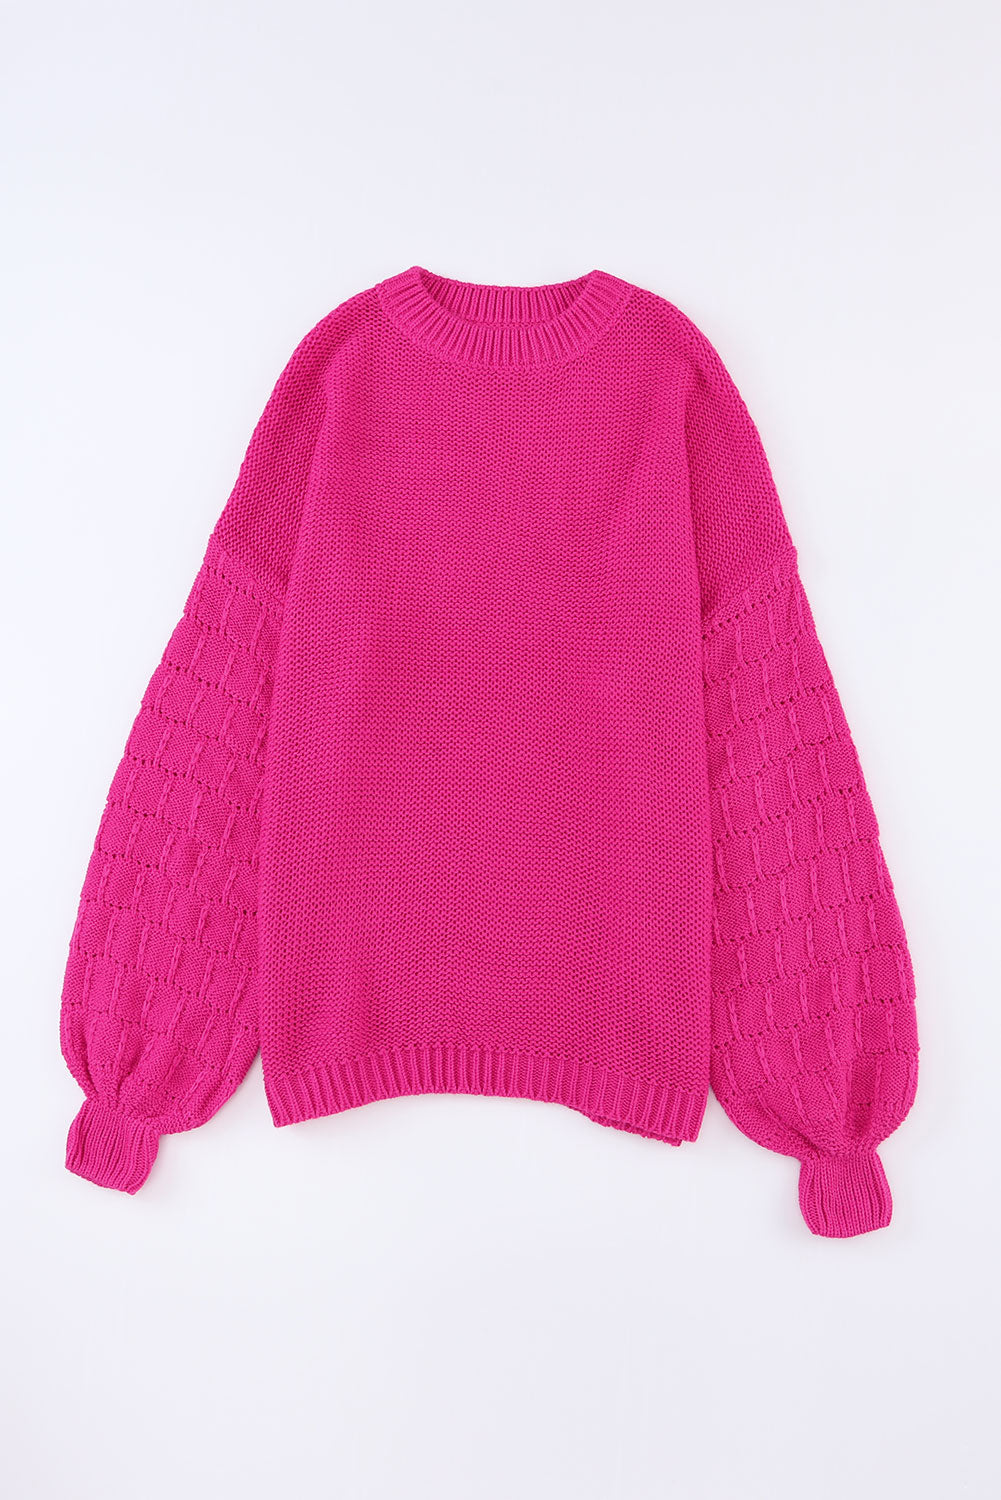 Khaki Casual Hollowed Long Sleeve Knit Sweater